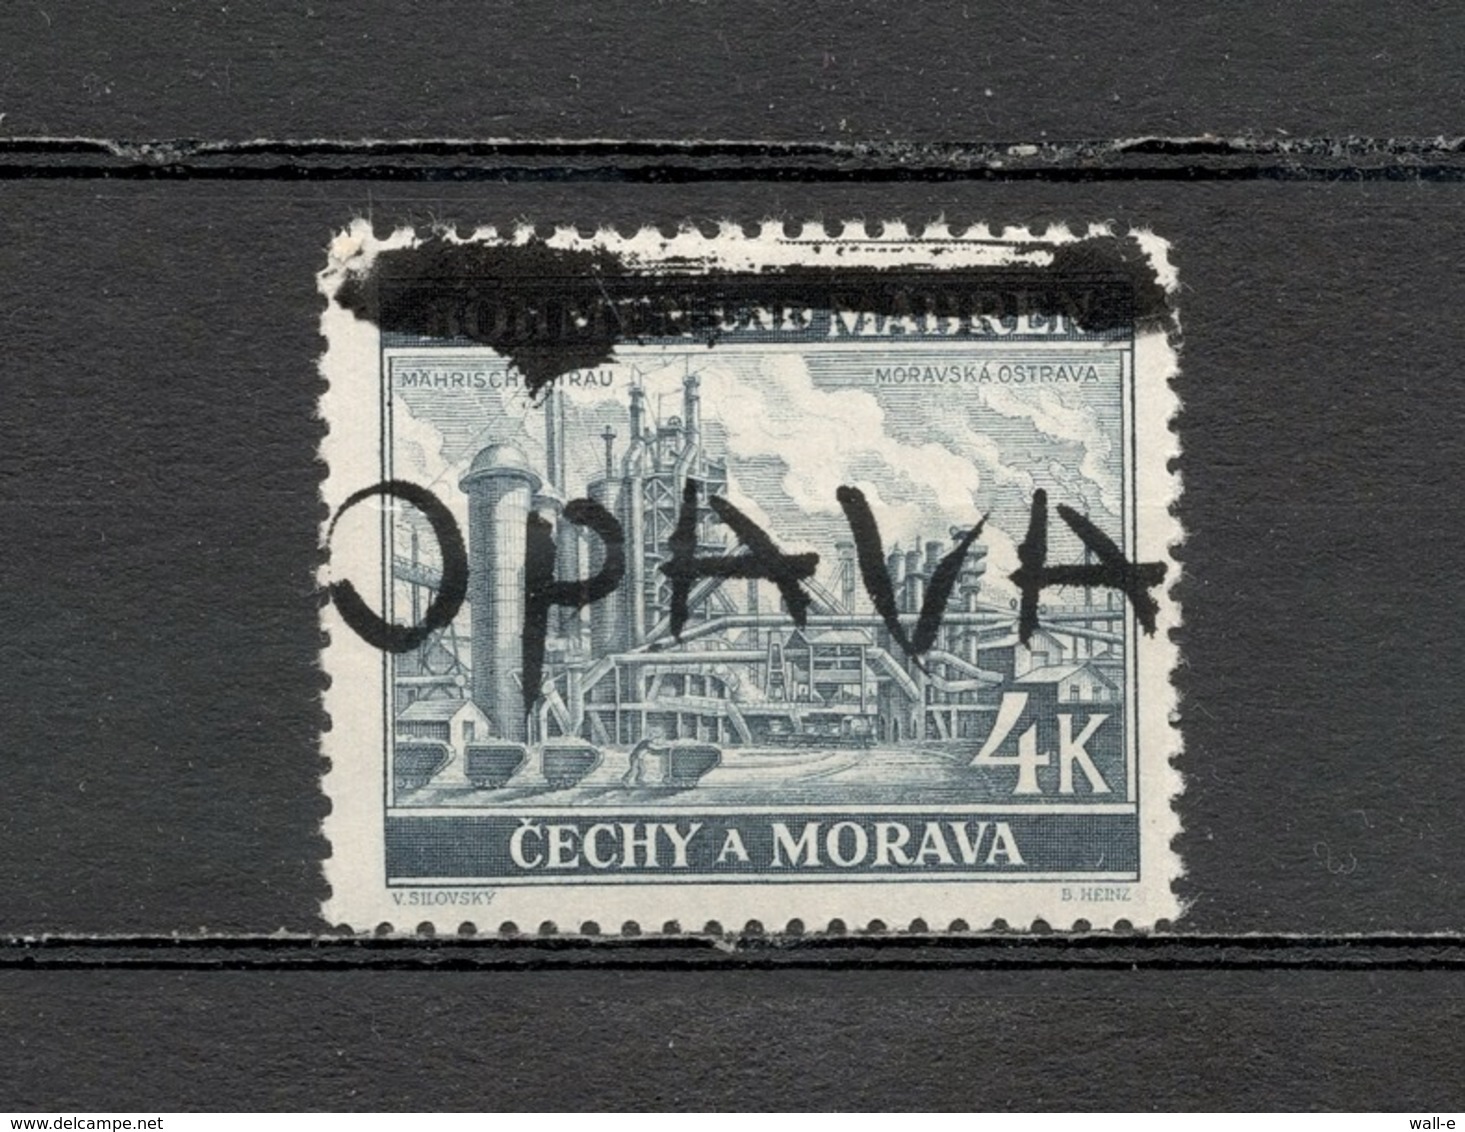 1945 Czechoslovakia Local Liberation Revolutionary Overprints OPAVA Postfrisch - Ongebruikt